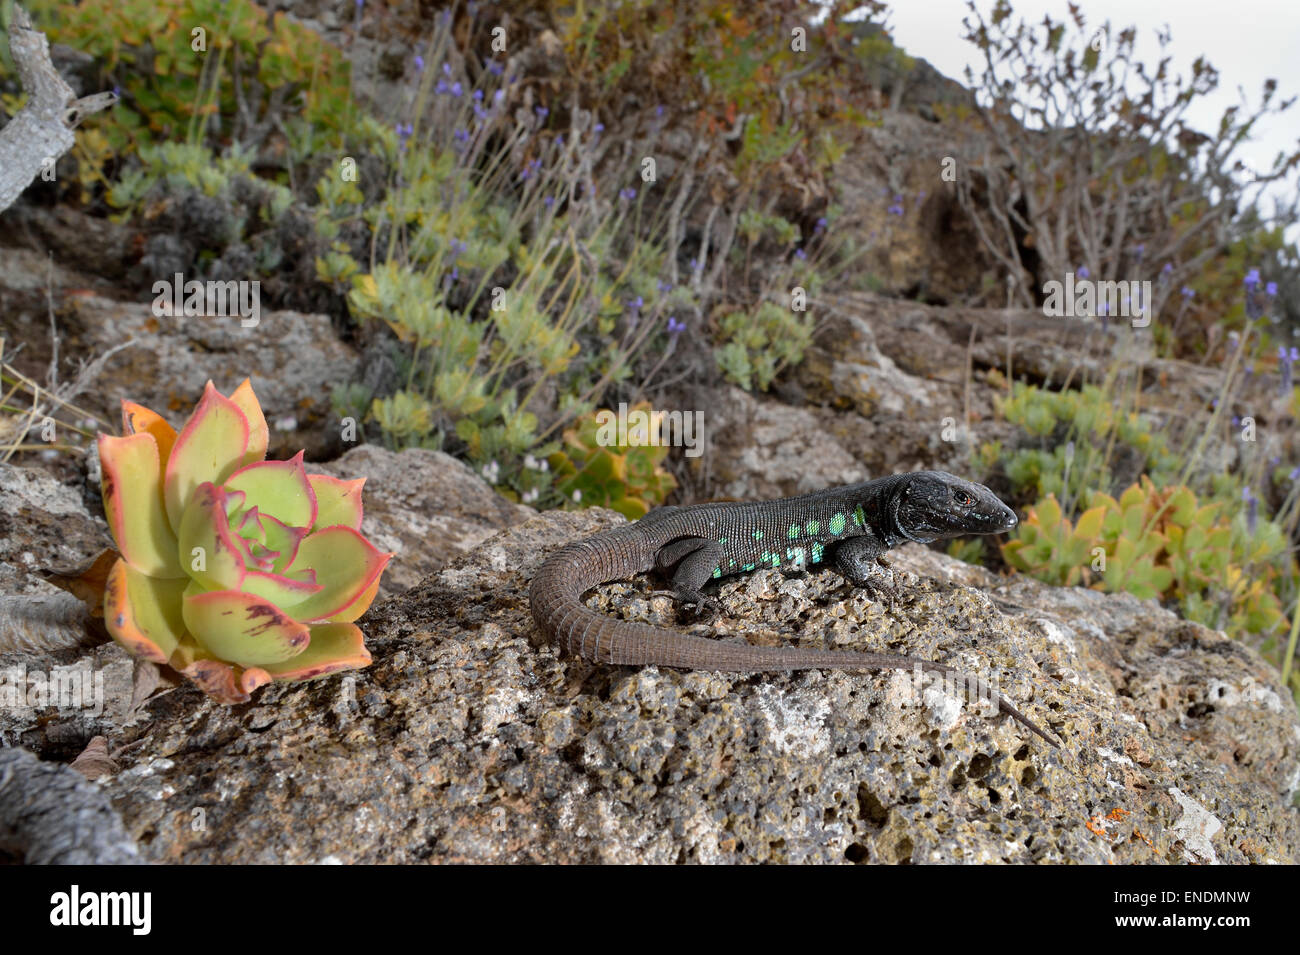 Canary islands, Fuerteventura island, Gallotia atlantica, Atlantic Lizard Stock Photo